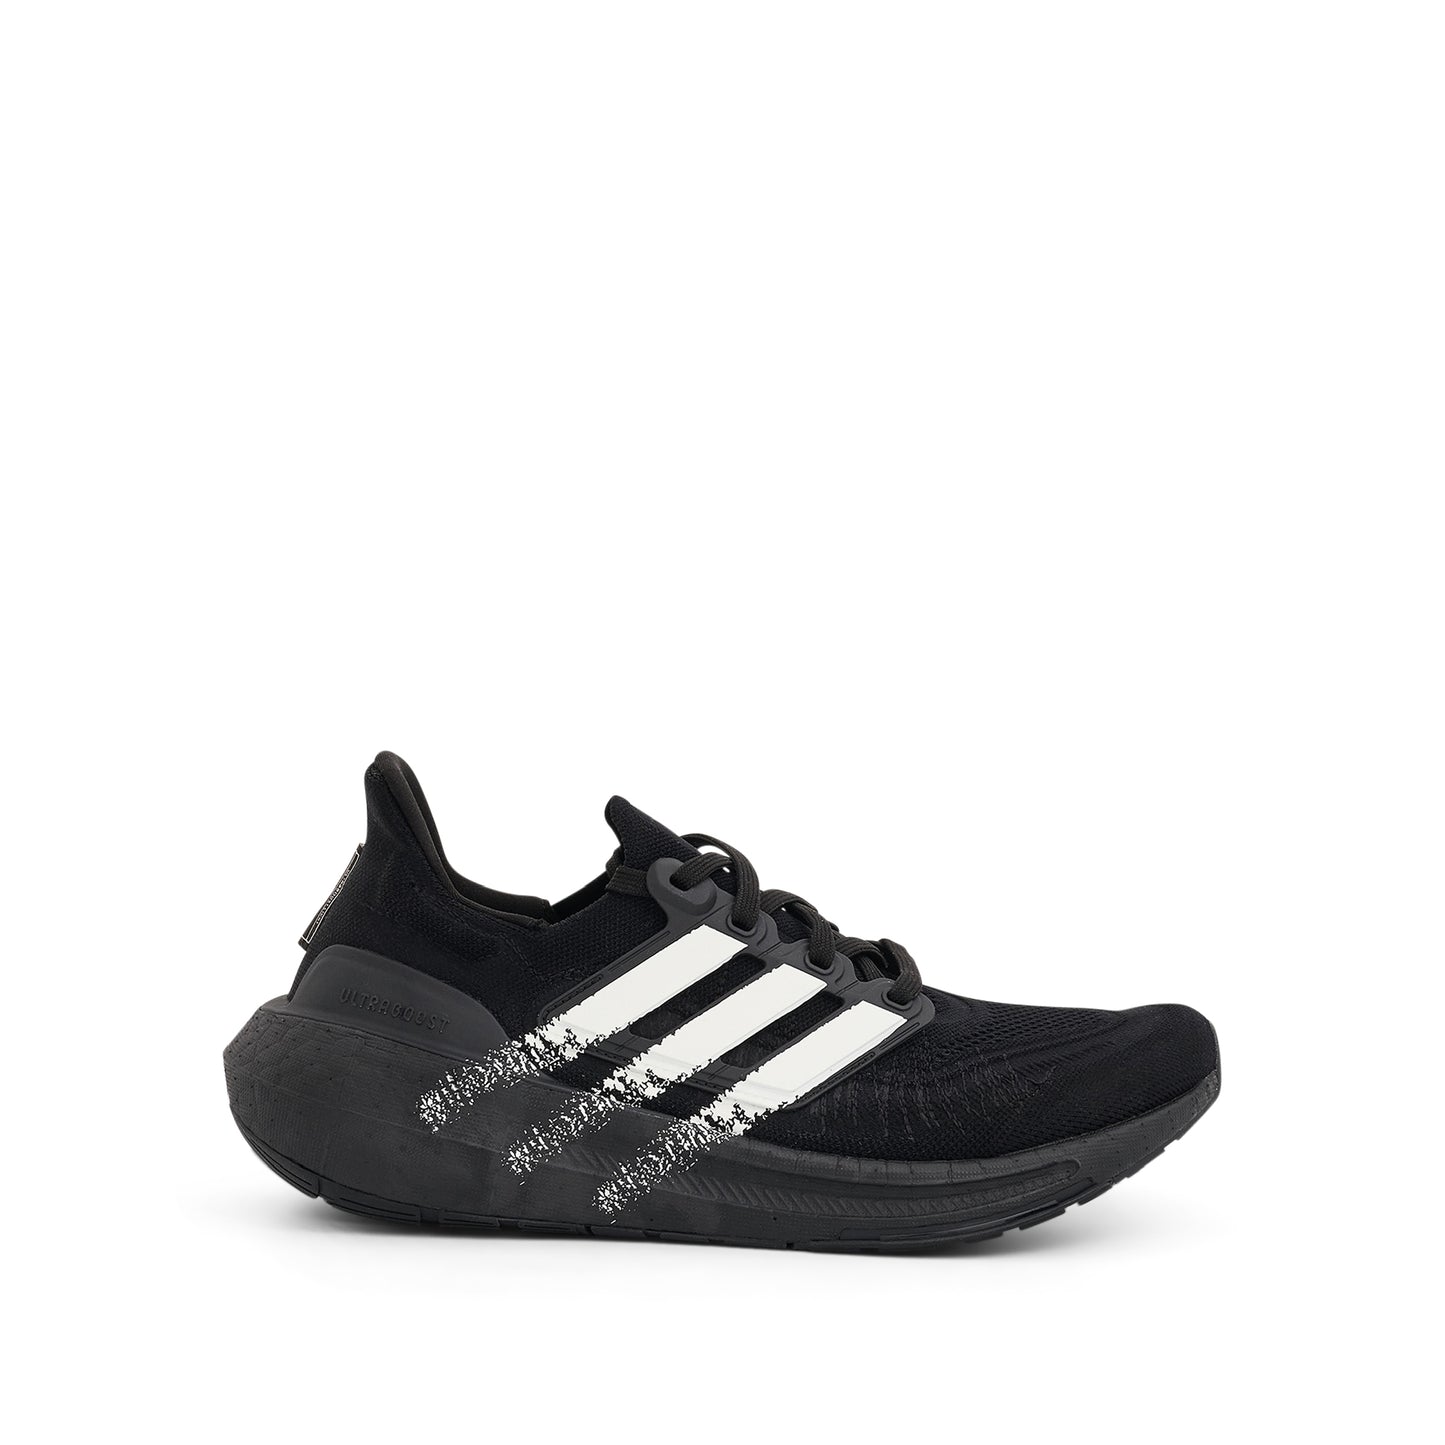 Ultraboost Light Sneakers in Black/White